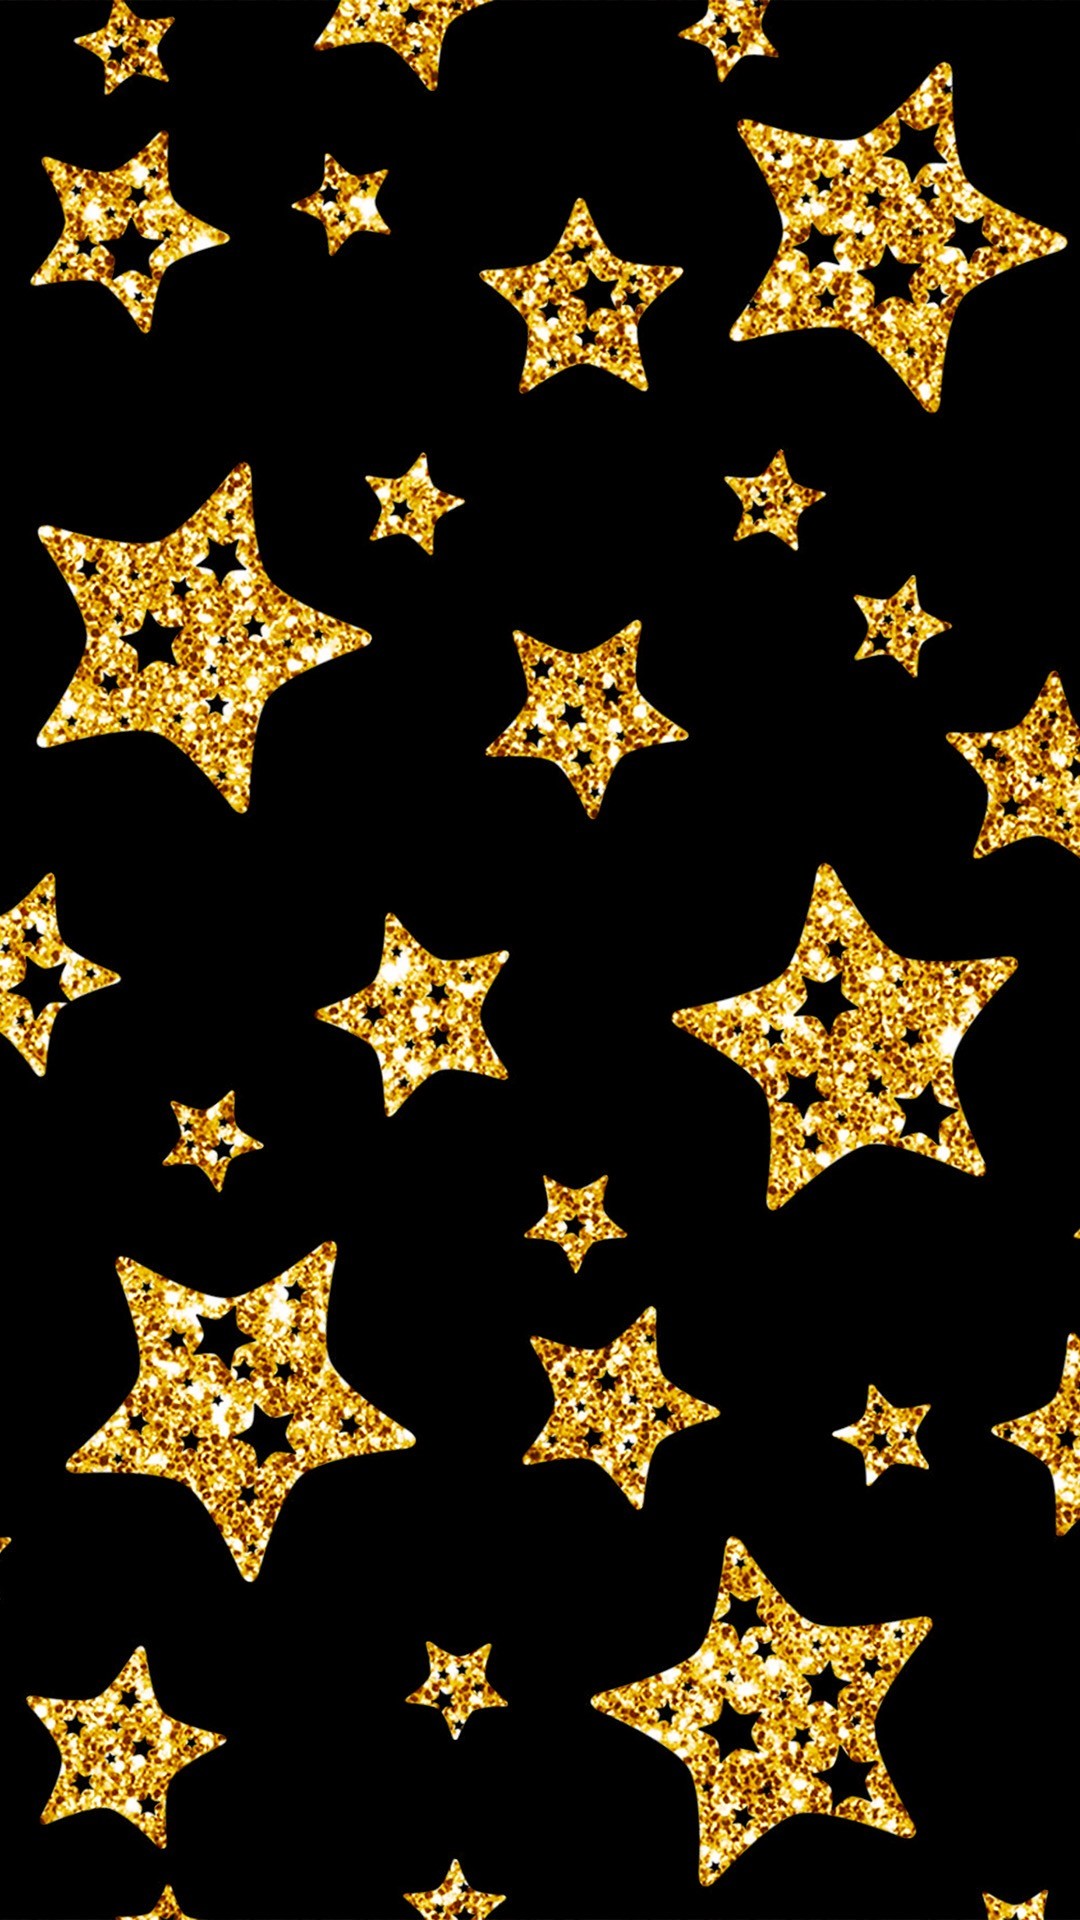 1080x1920 Black and gold stars